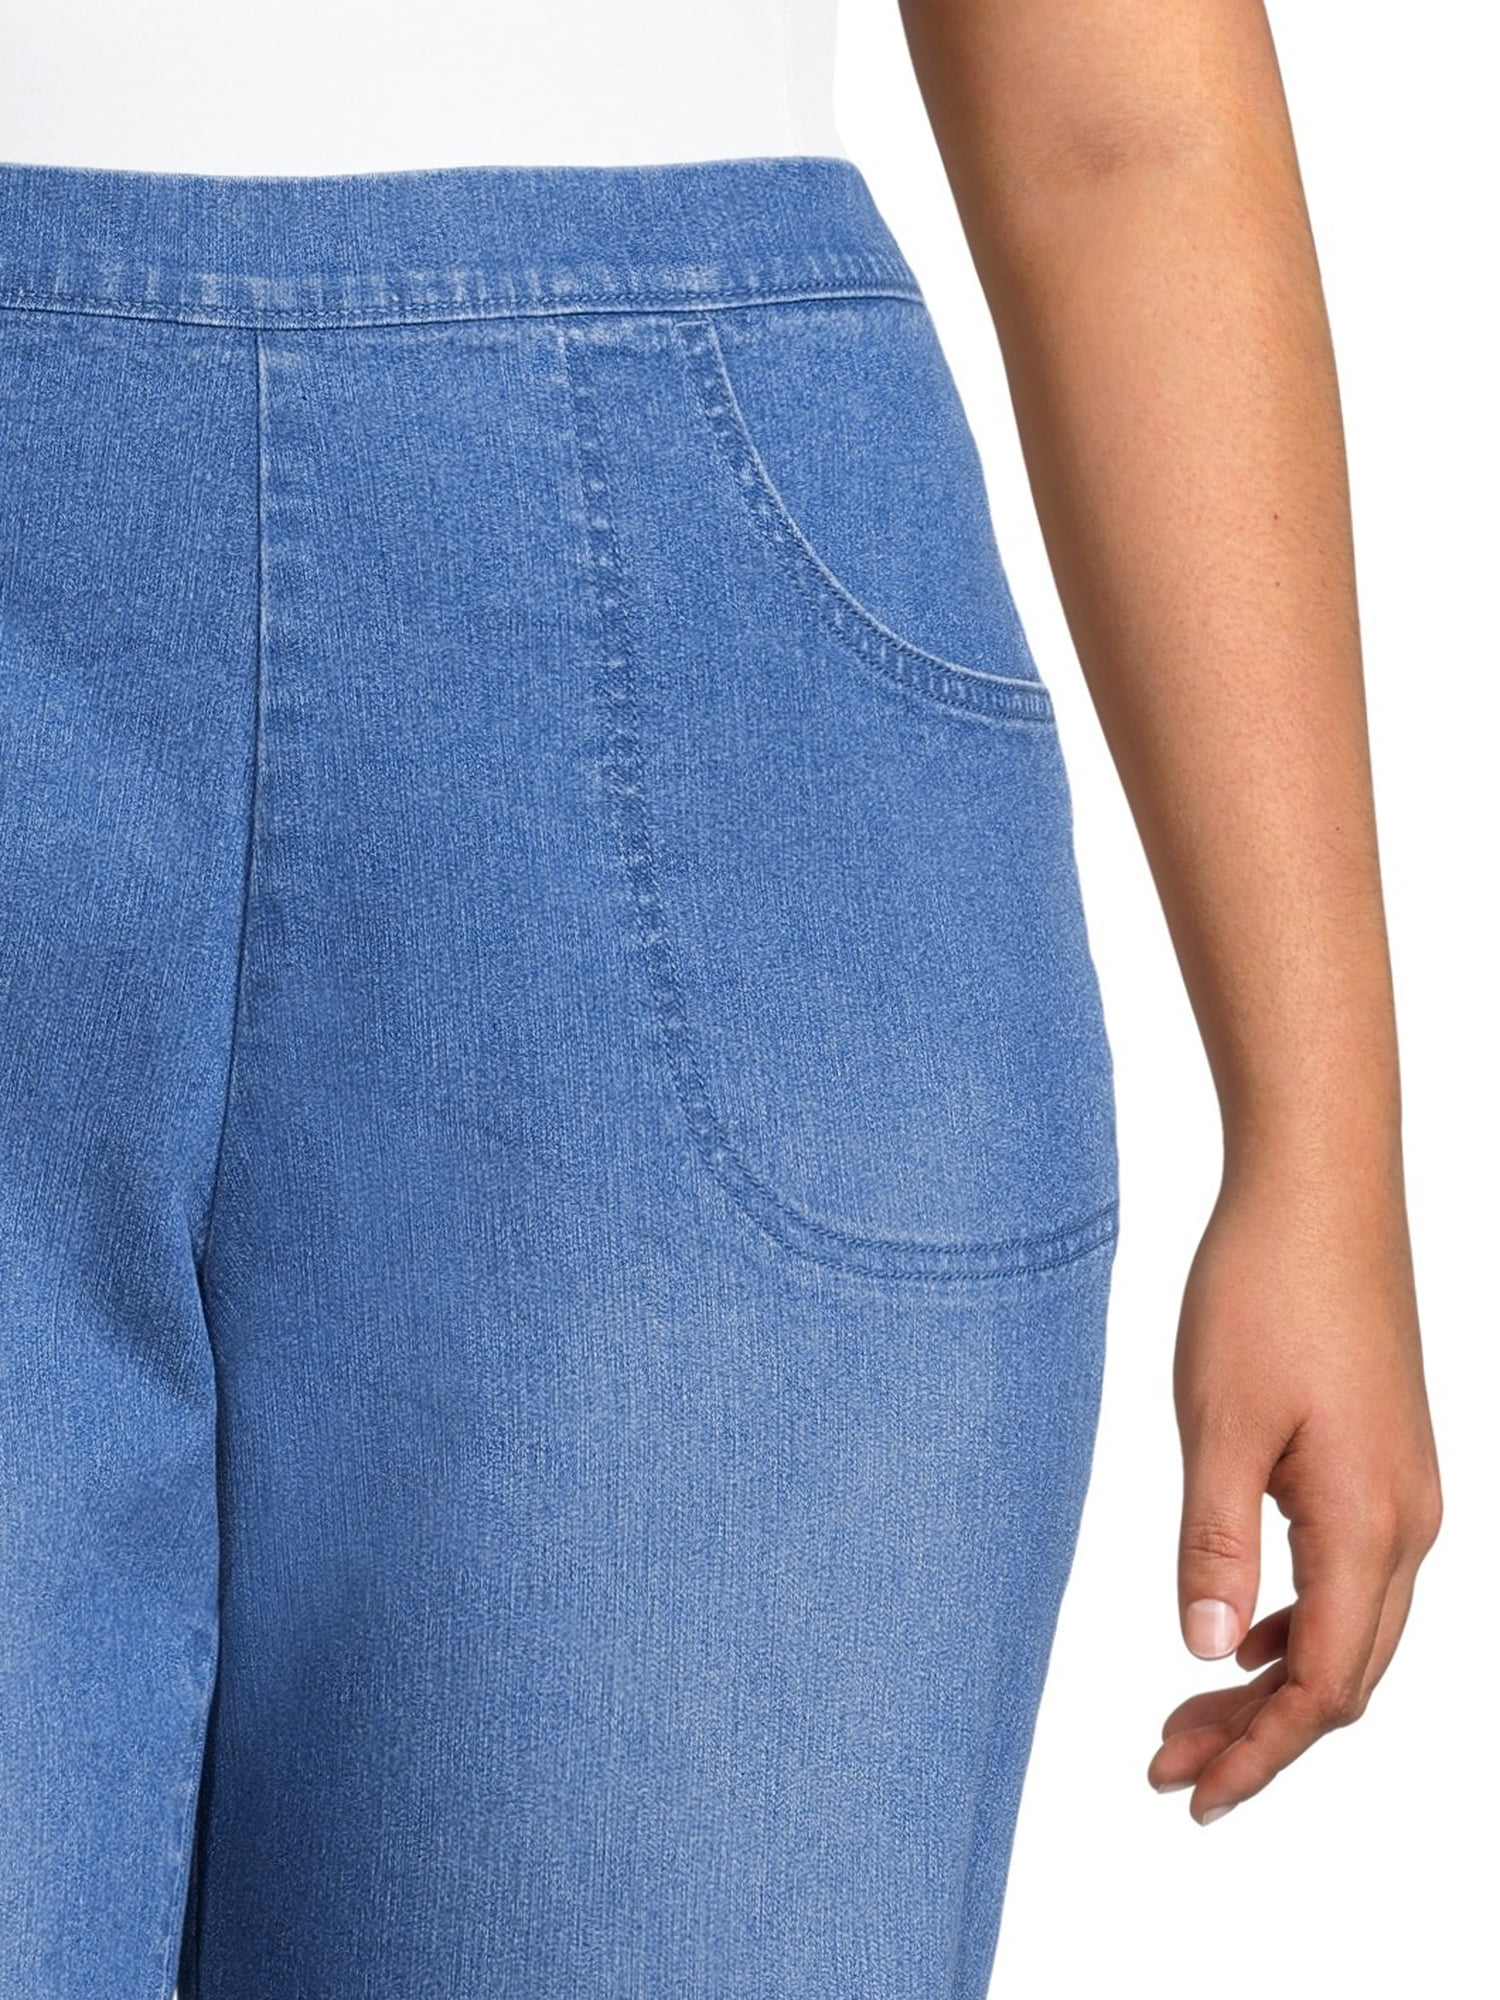 Just My size JMS women039s 22w average Cora black jeans denim pants   eBay